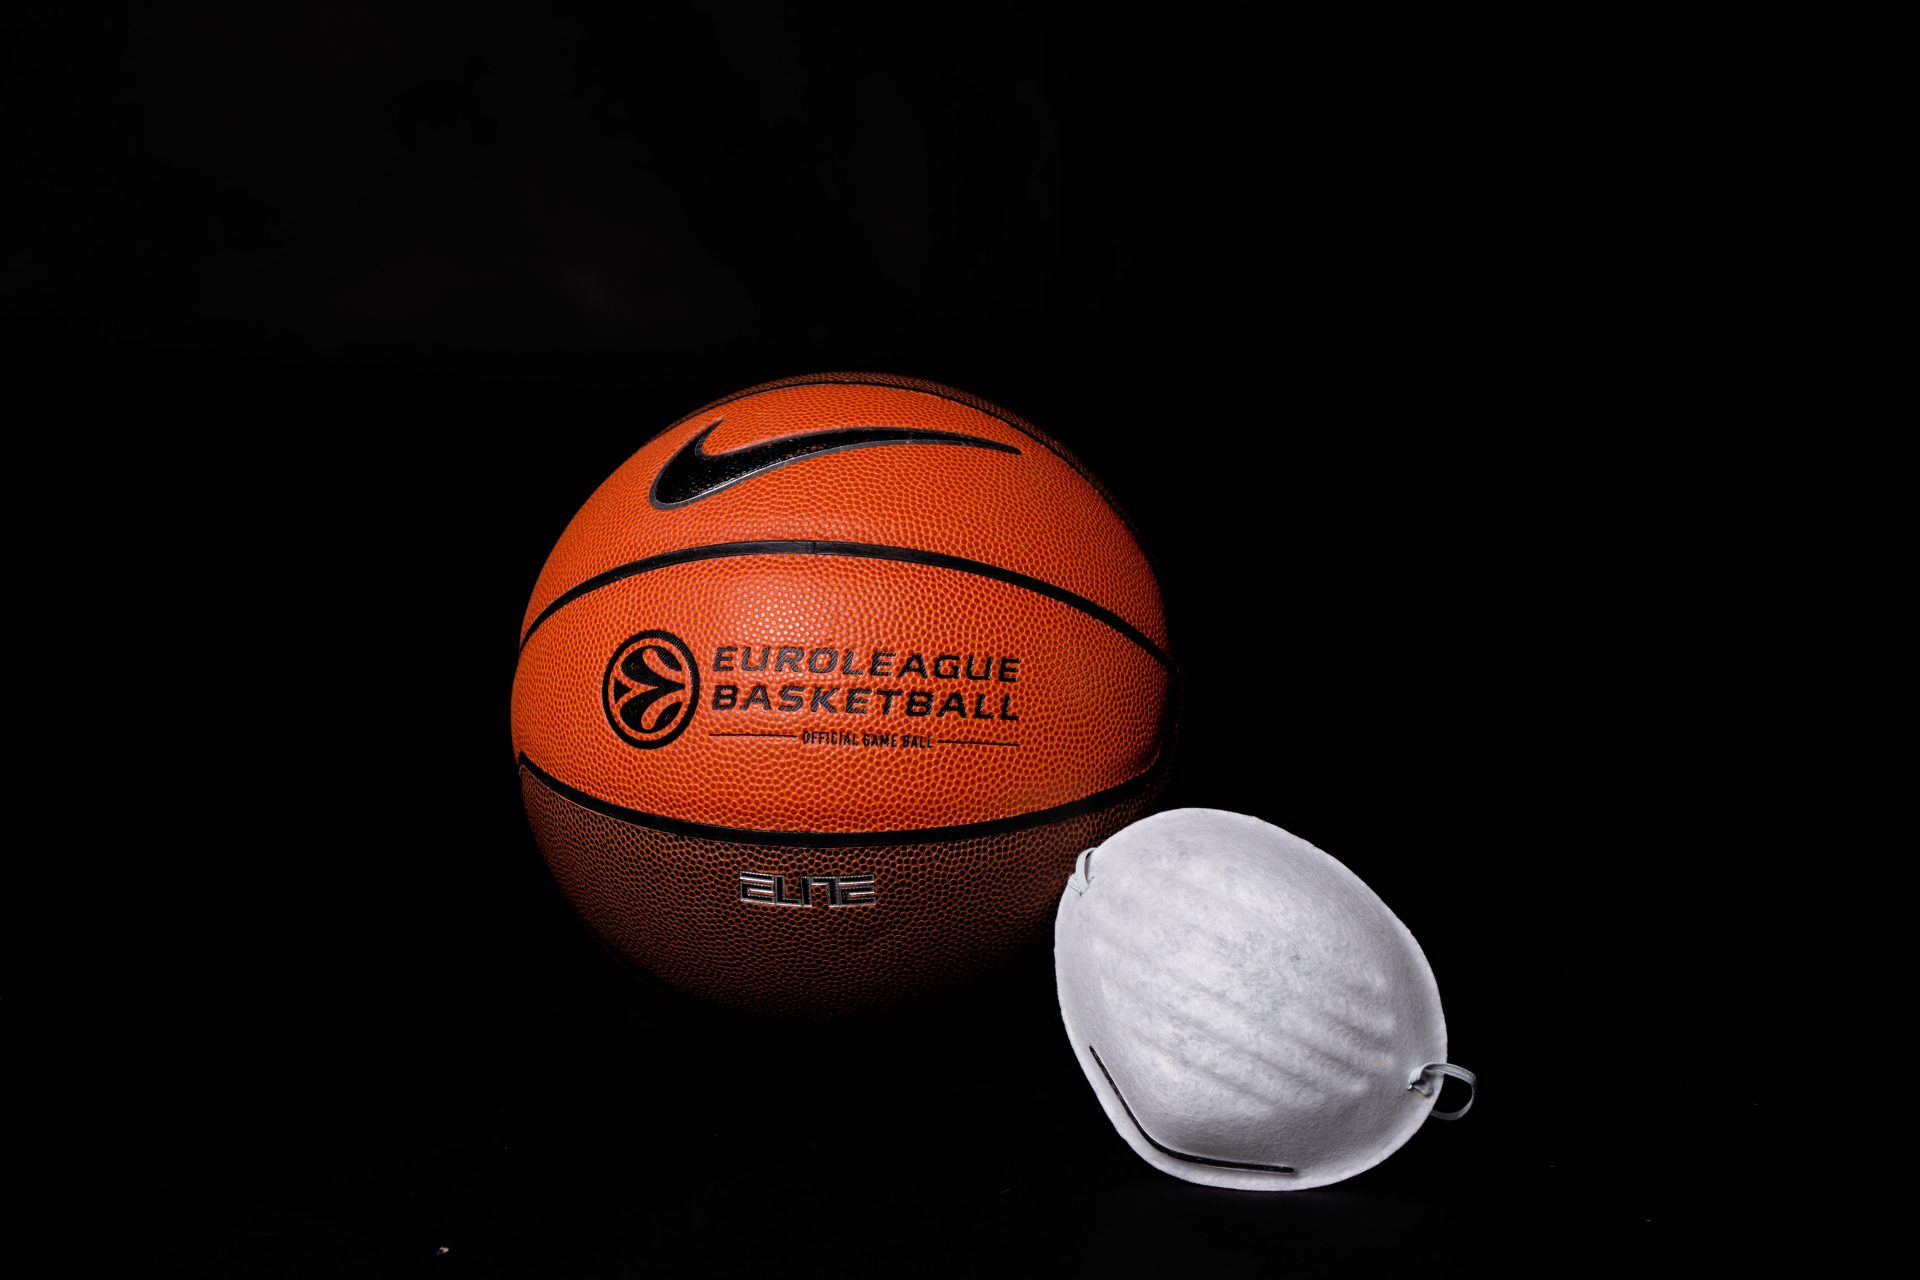 Euroleague basketball